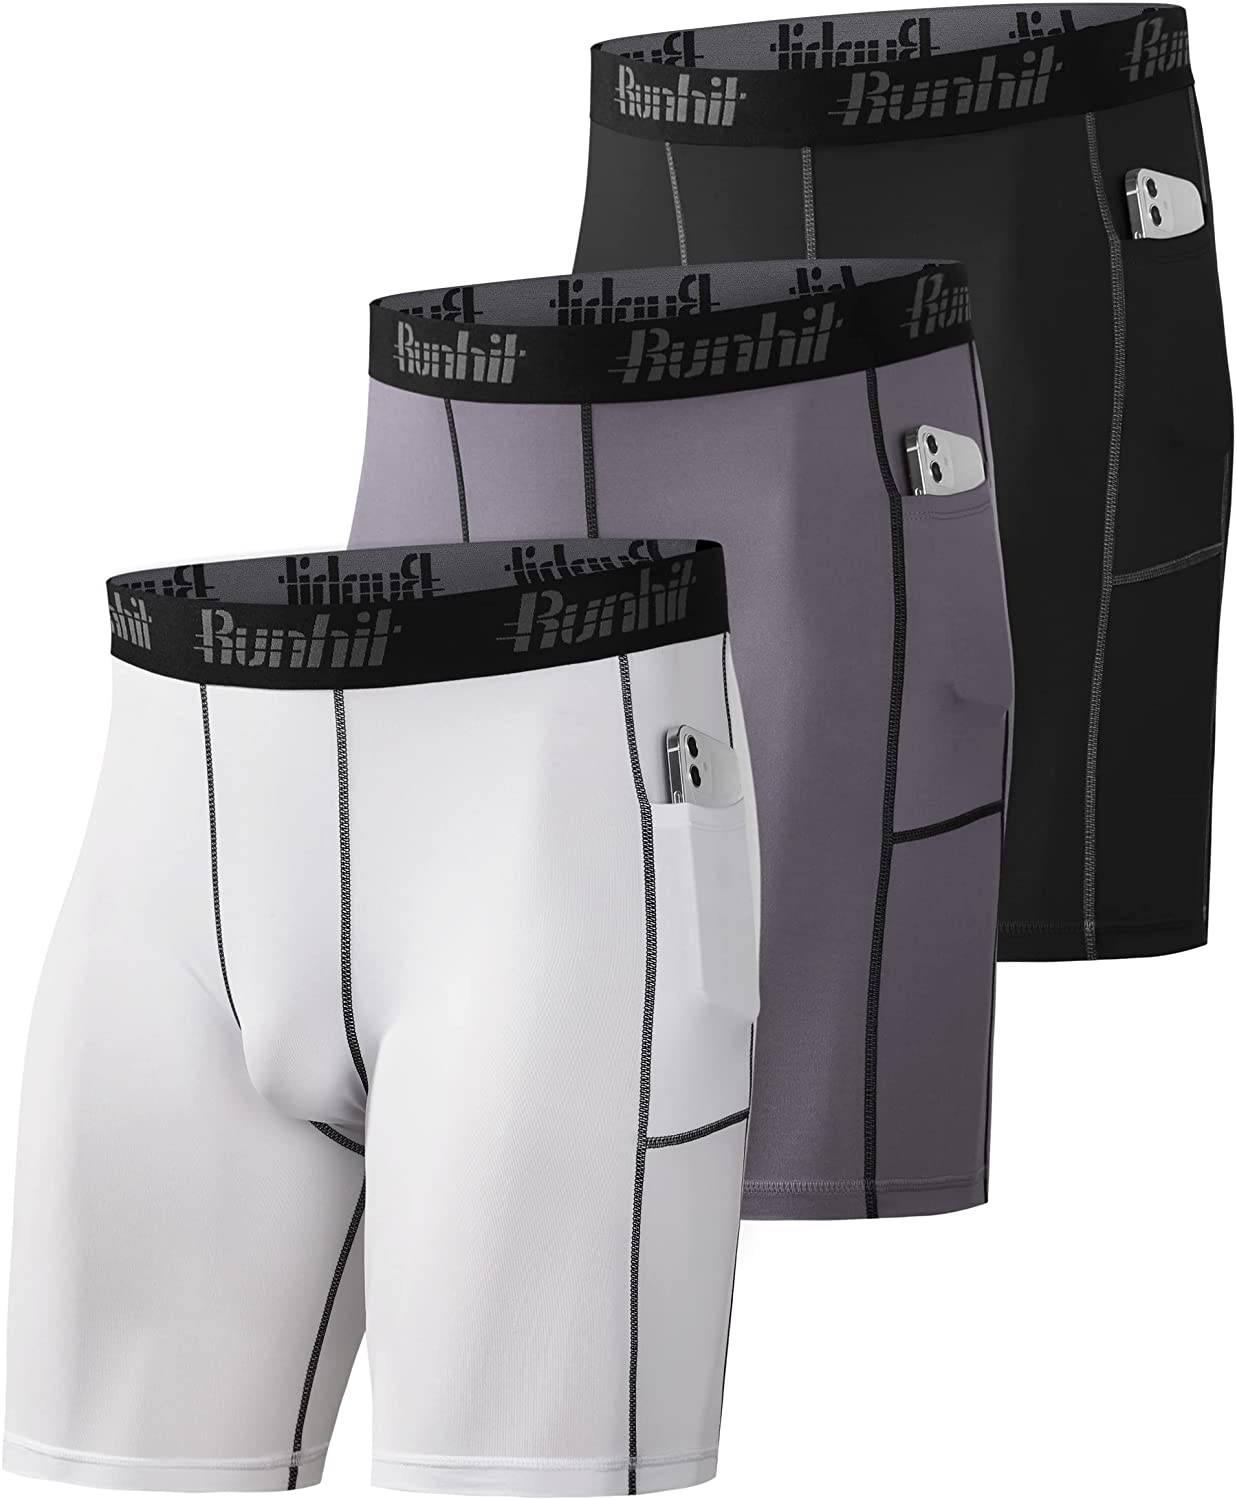 Runhit Compression Shorts Men Athletic Underwear for Men Spandex Running Shorts Workout Sports